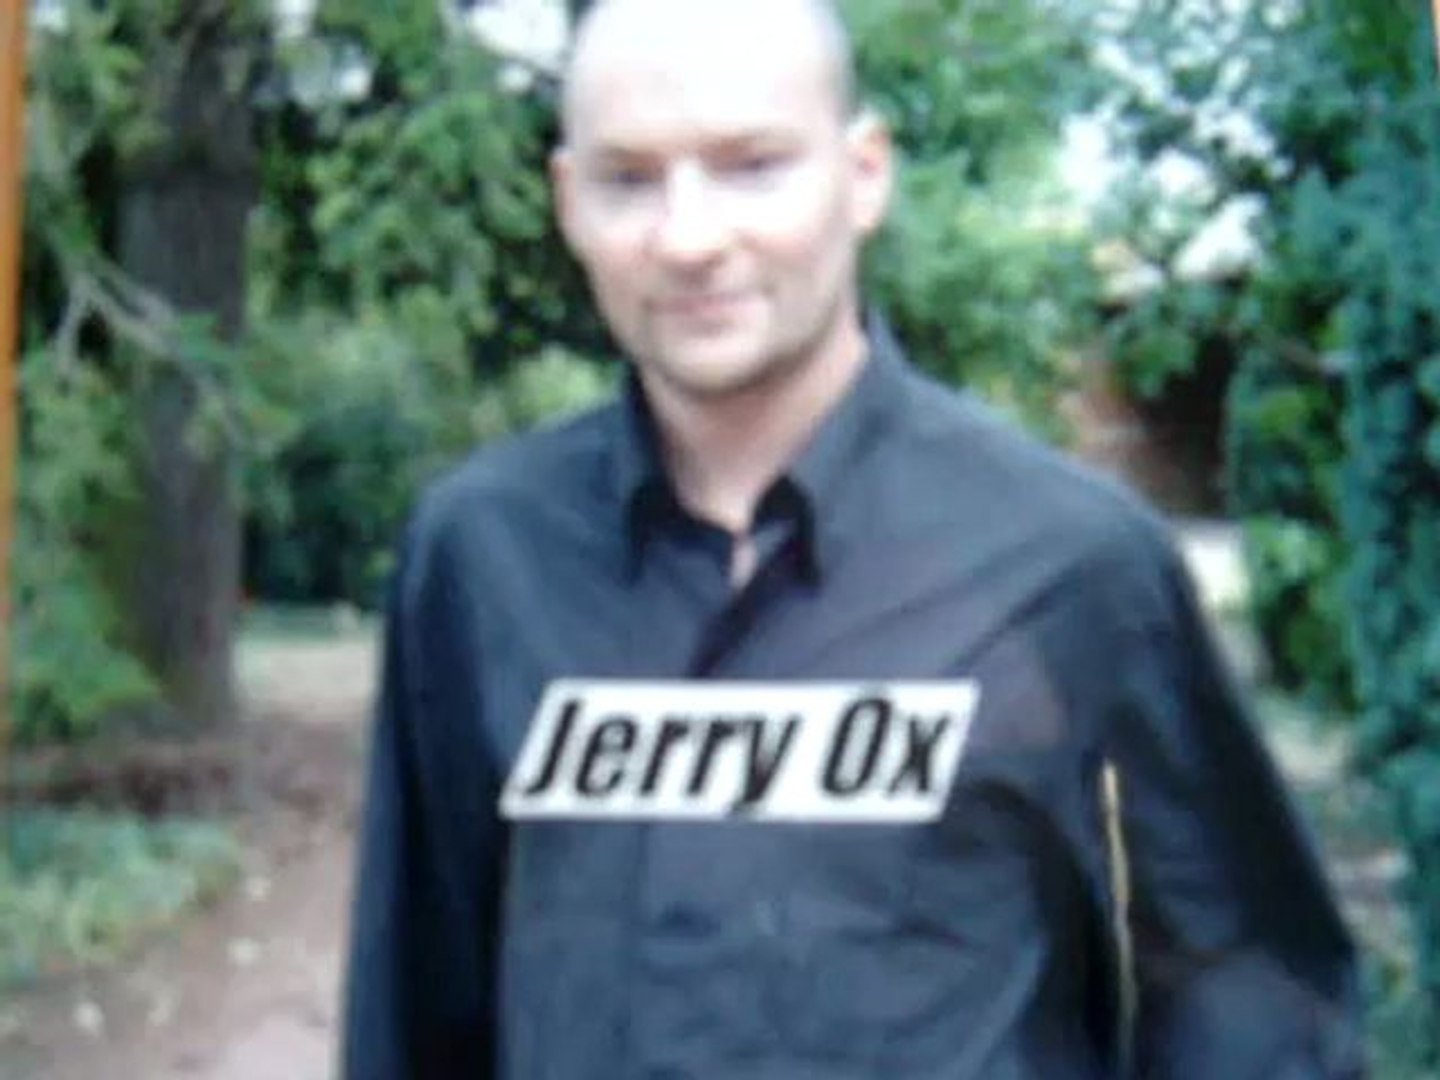 Jerry OX